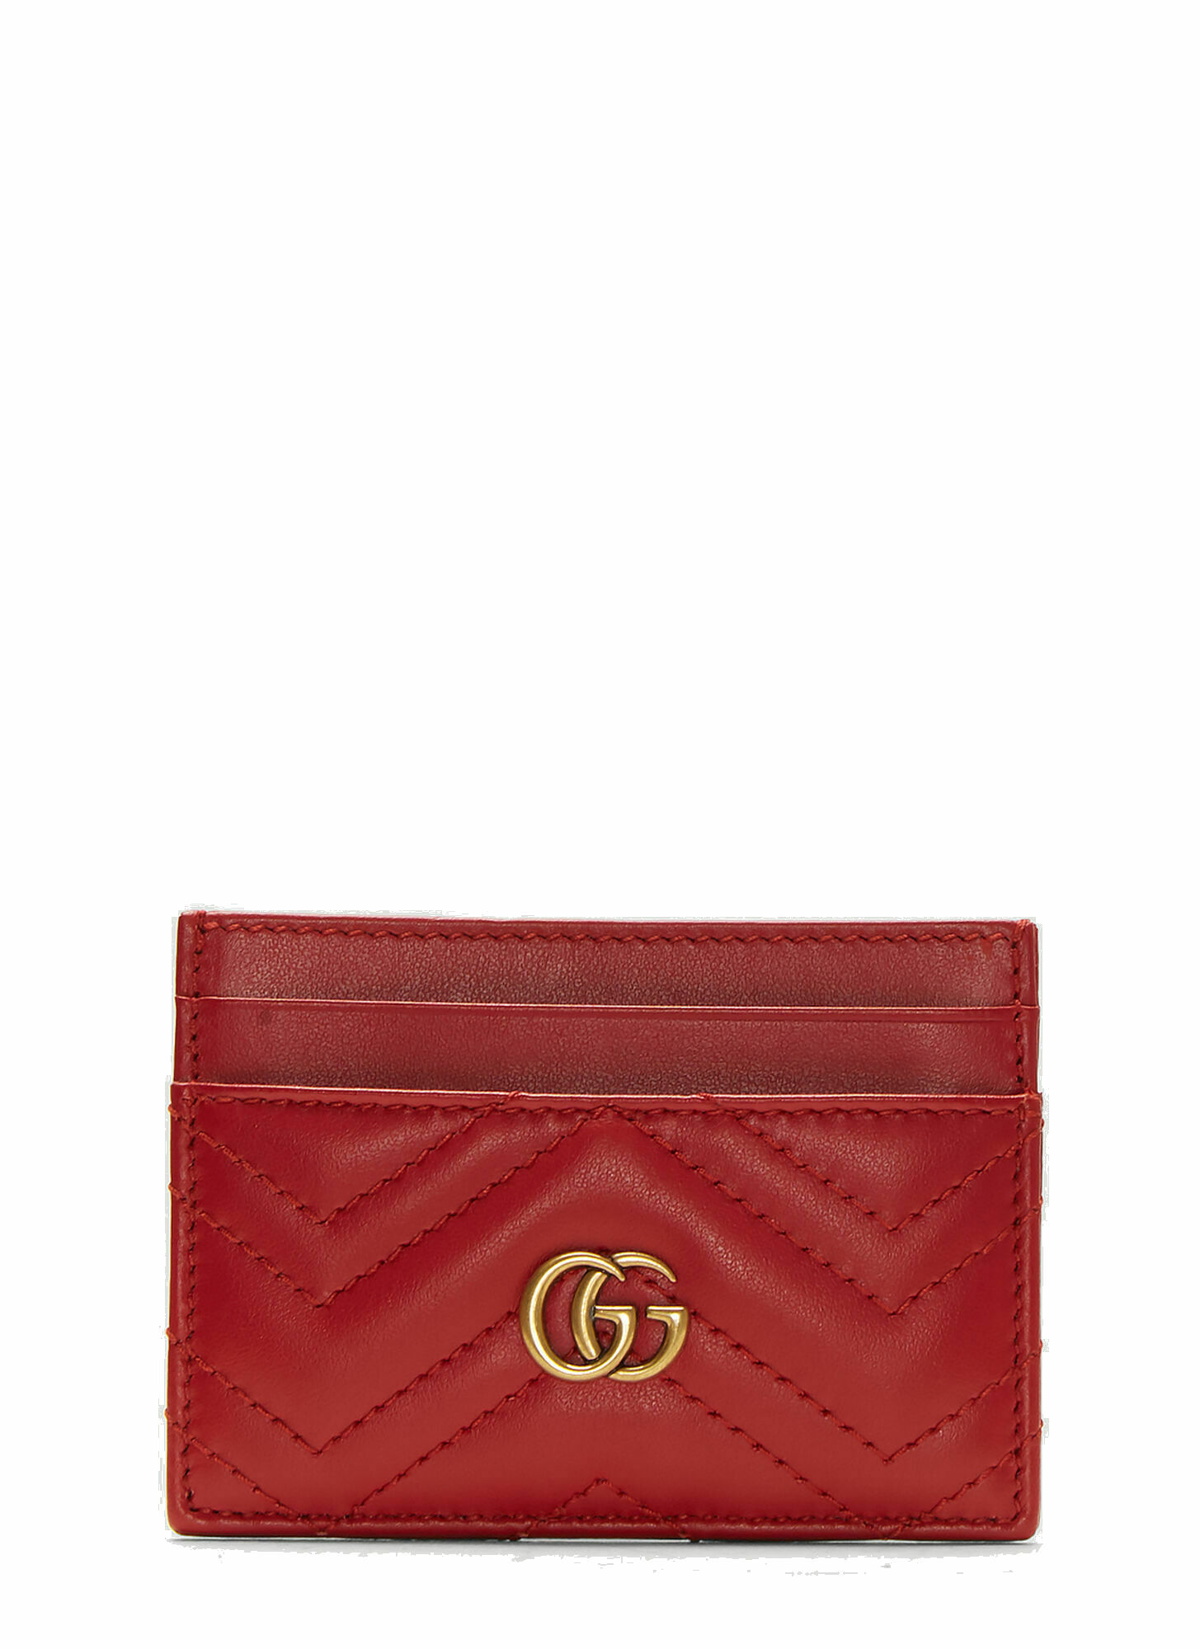 Gucci Pink Leather GG Marmont Card Case QFA1BG1LPB005